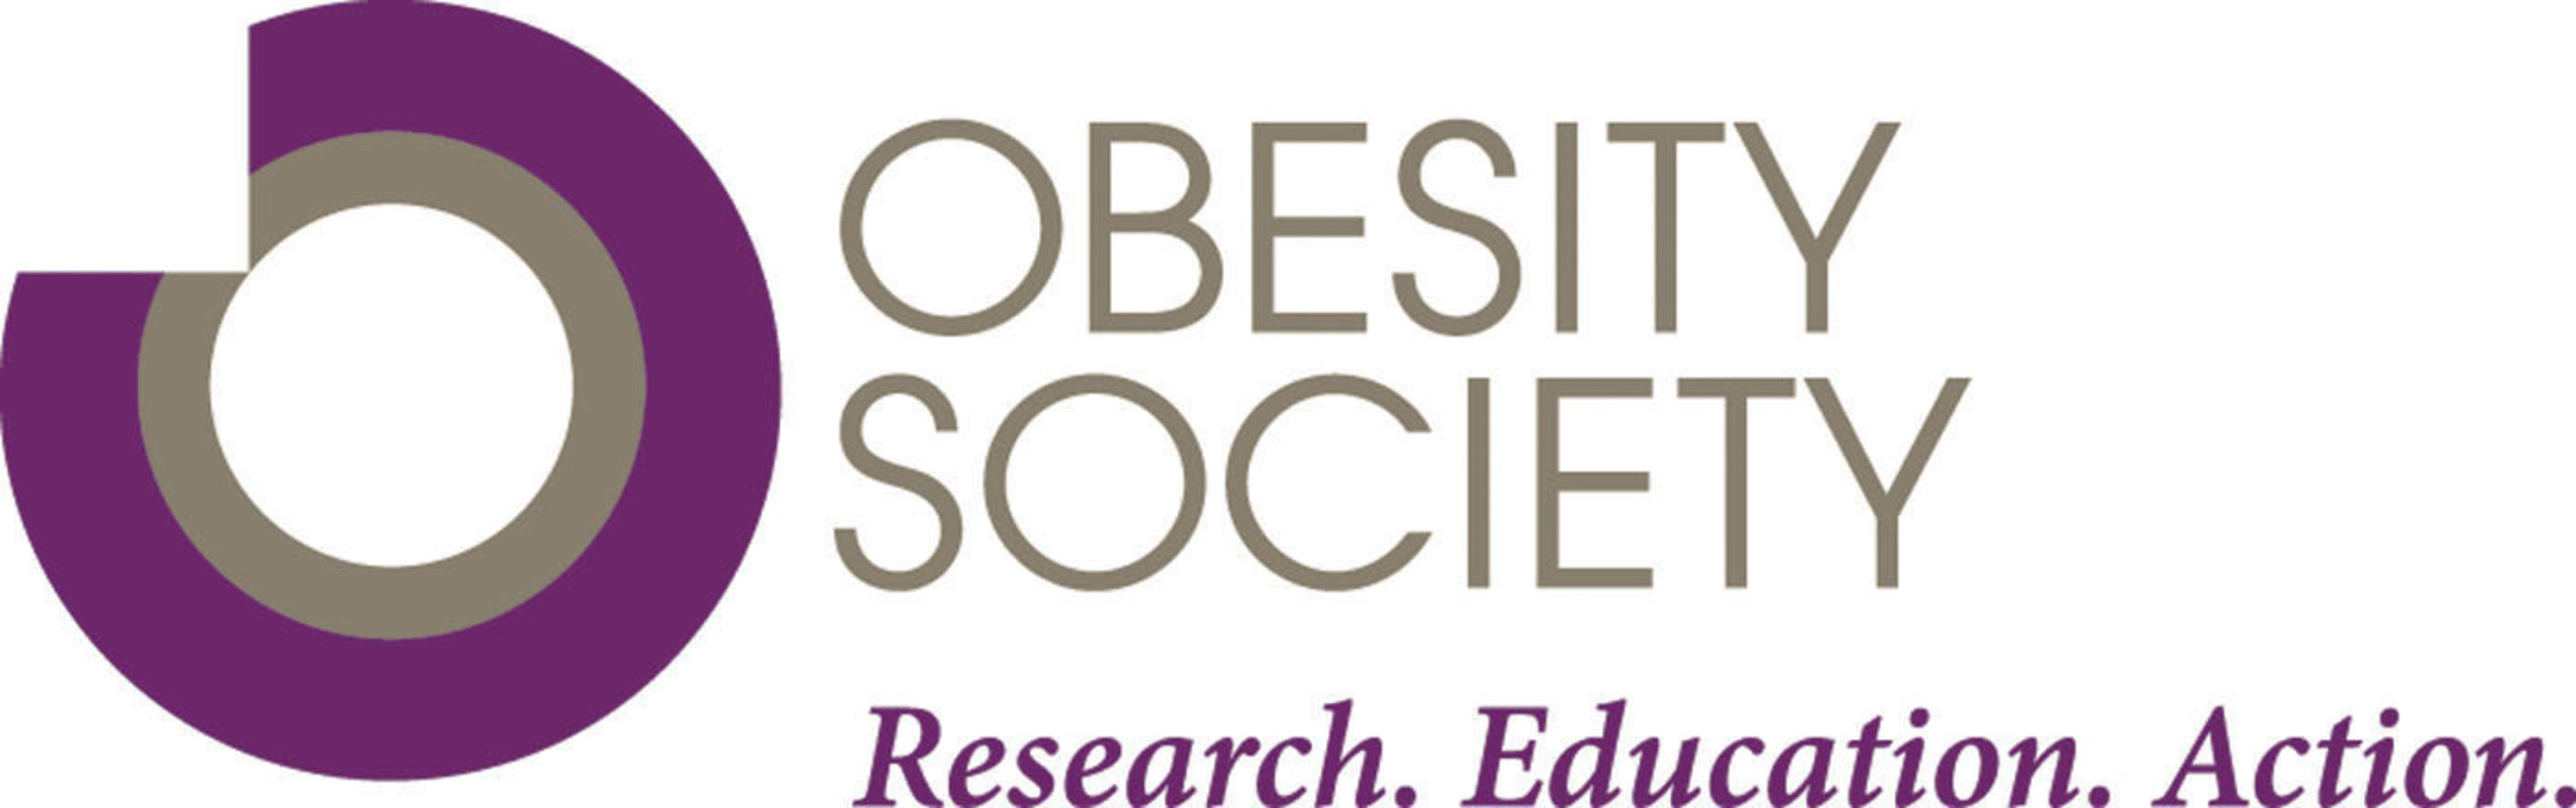 The Obesity Society Logo. (PRNewsFoto/The Obesity Society) (PRNewsFoto/The Obesity Society)